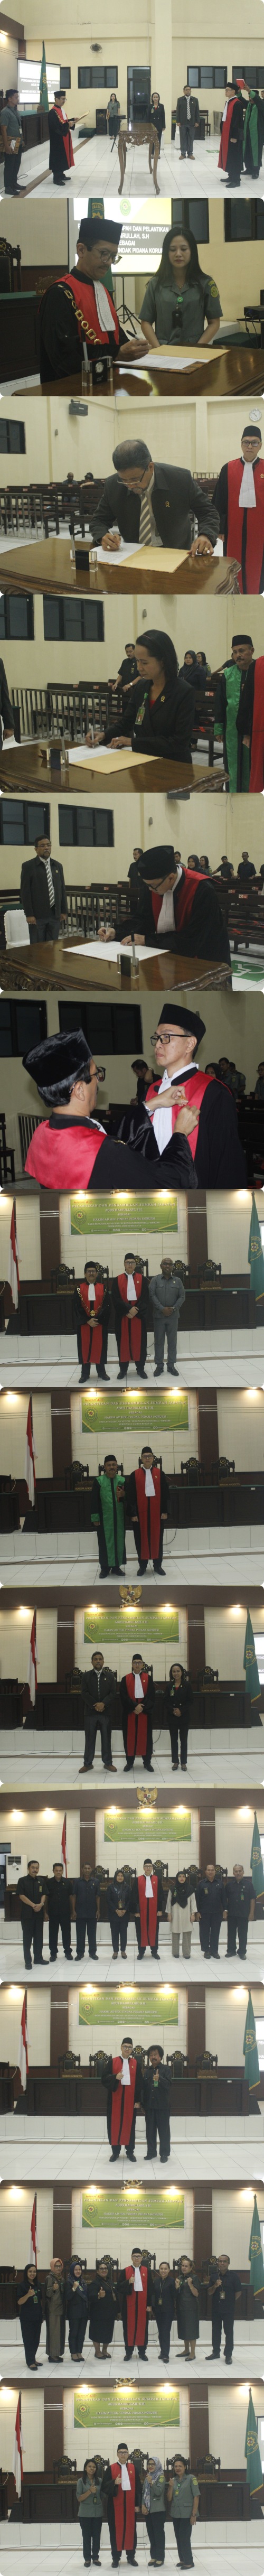 Pelantikan Hakim Ad Hoc Bapak Agus Hairullah S